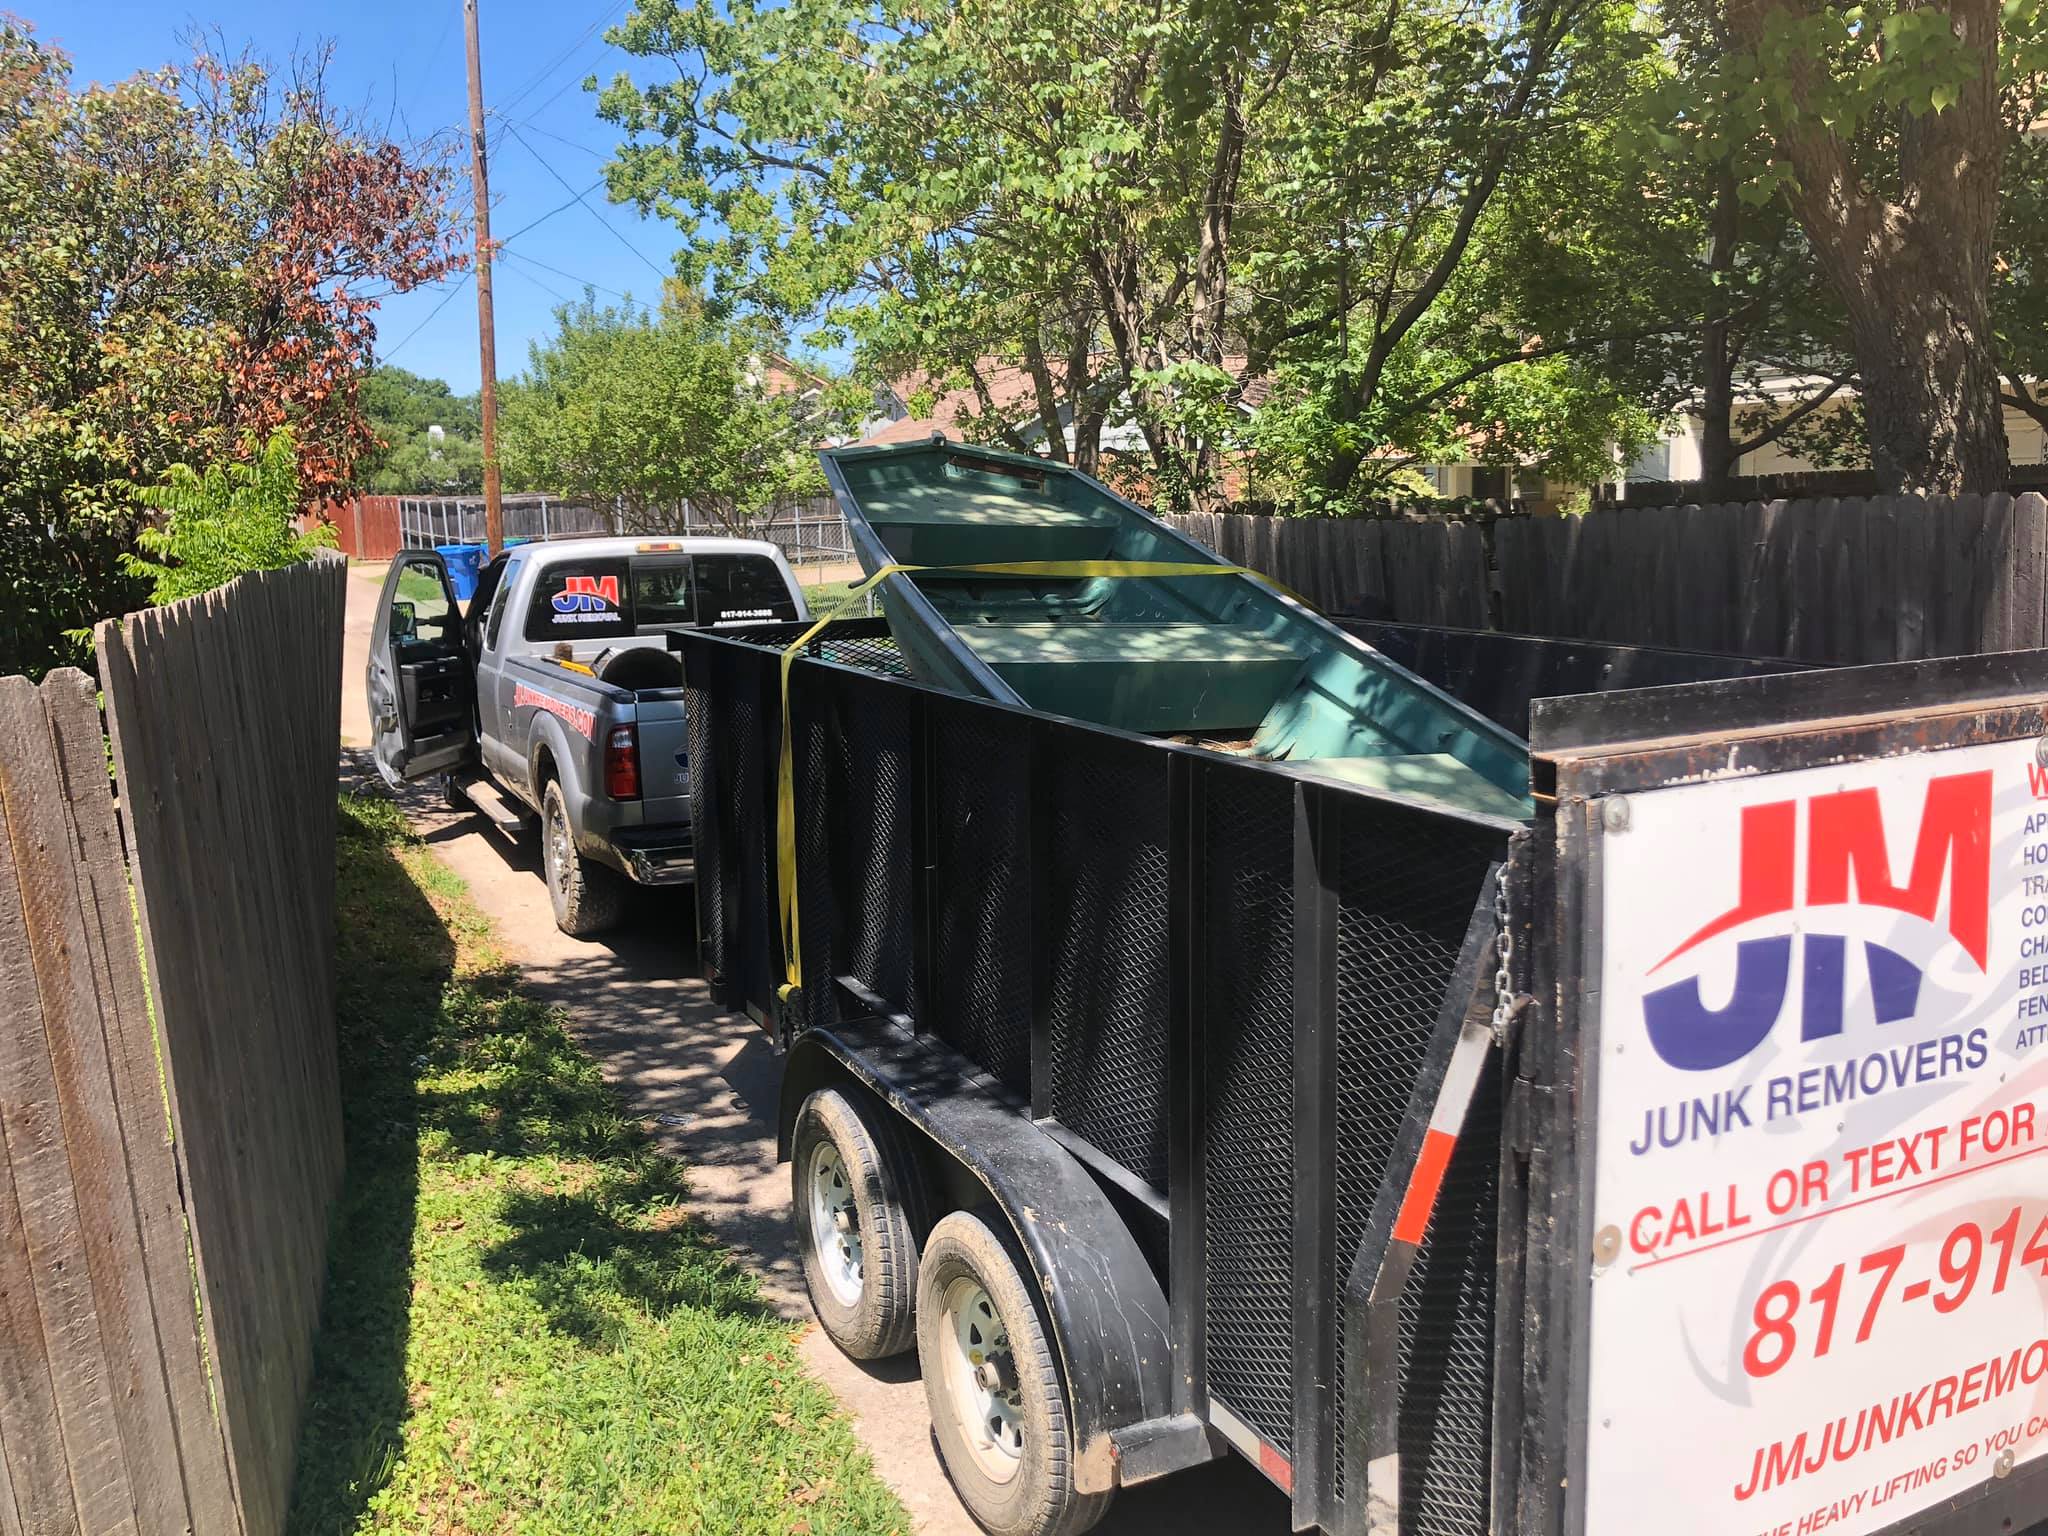 JM Junk Removers junk removal truck